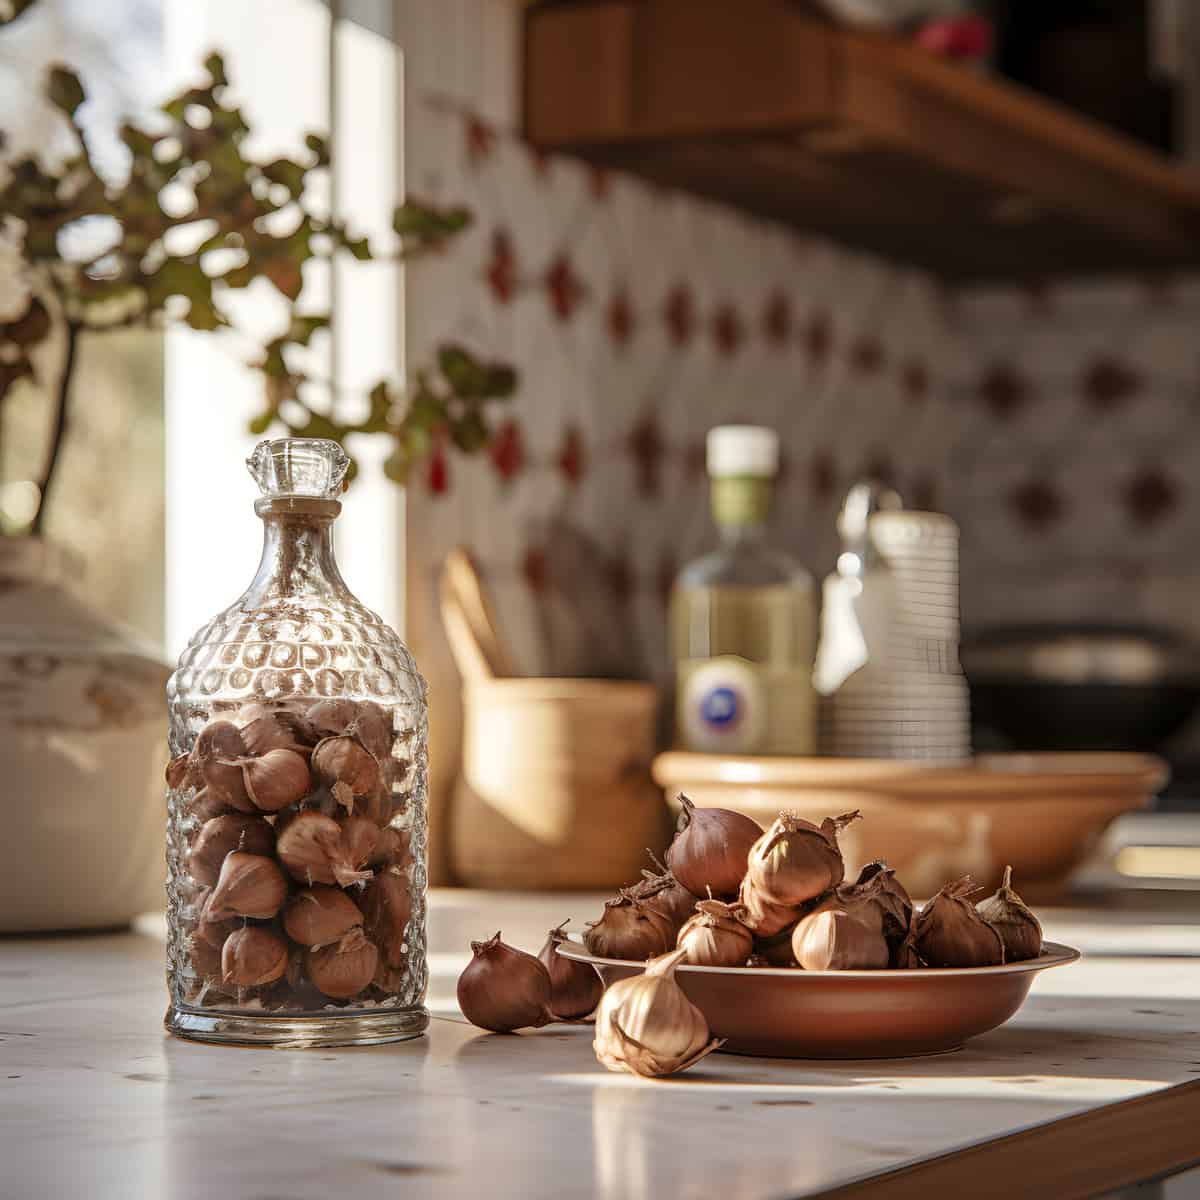 Hazelnuts on a kitchen counter